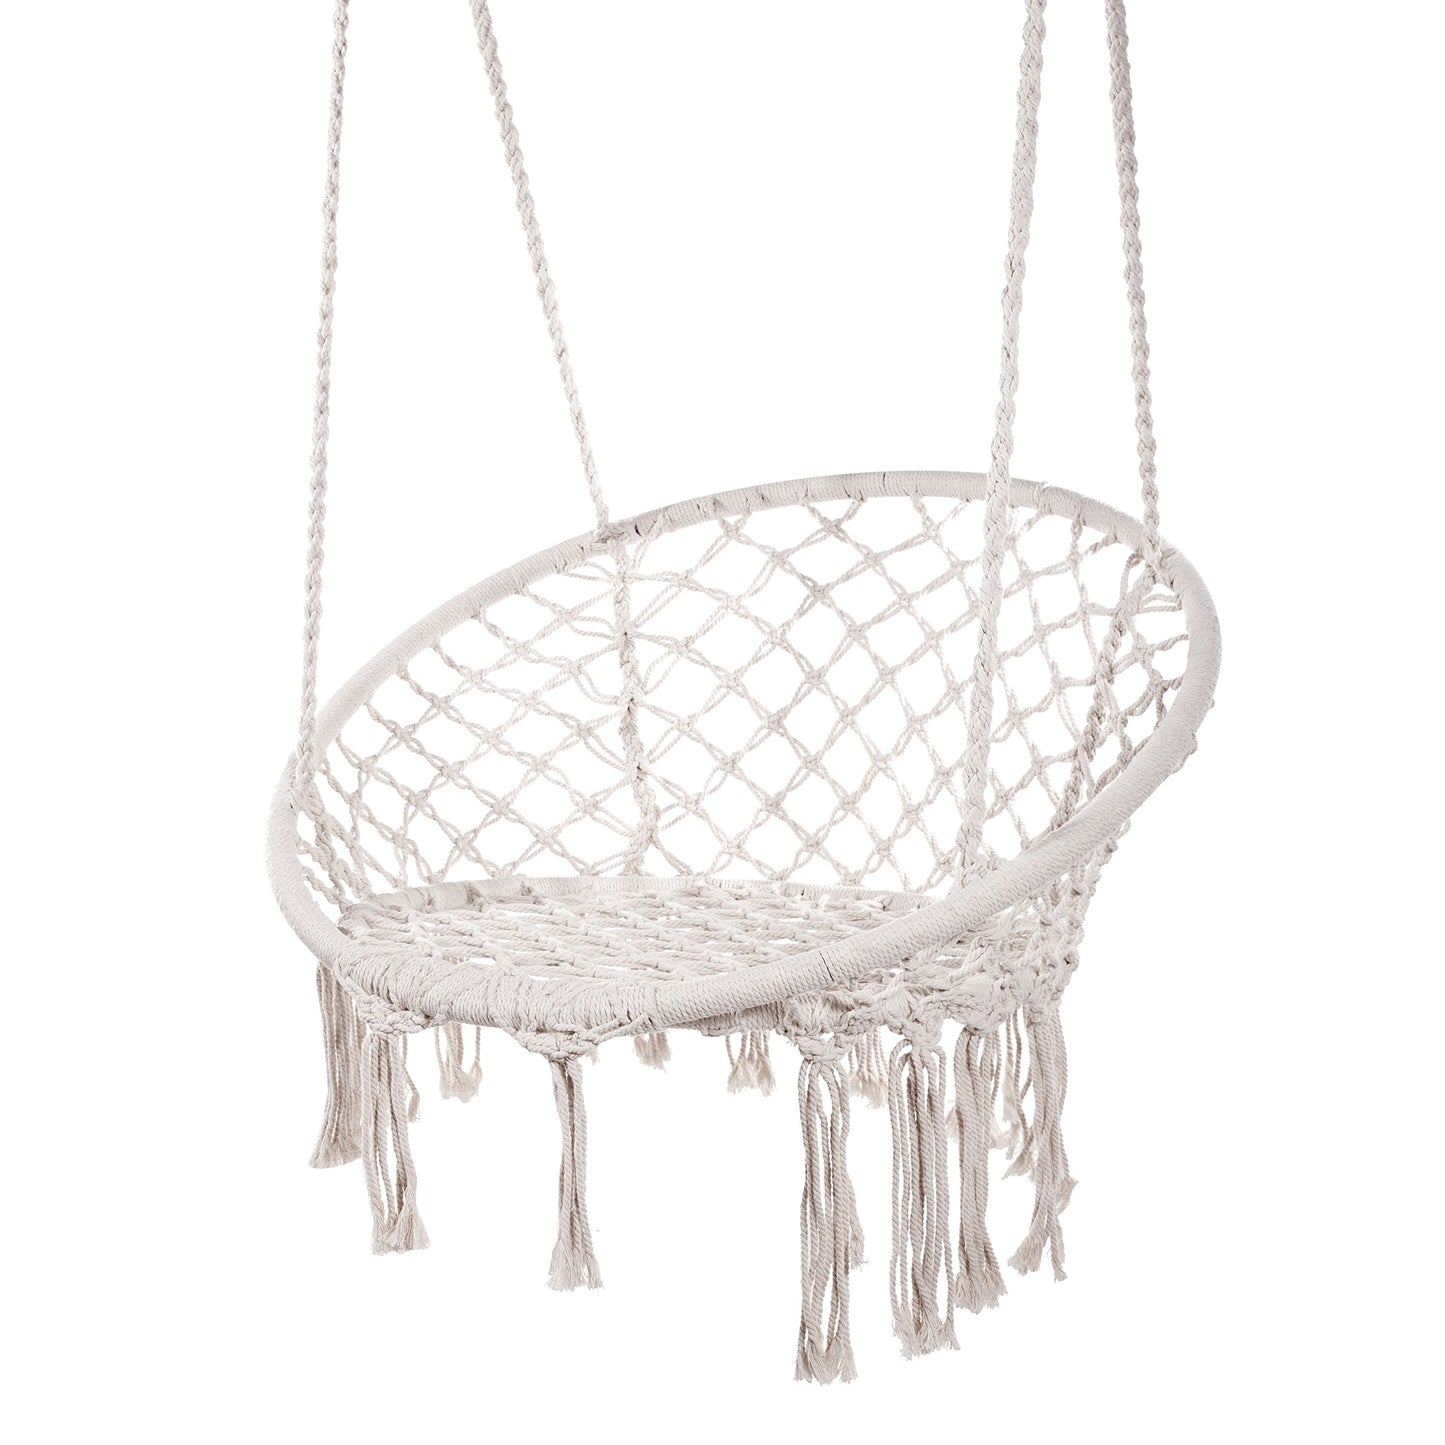 Hanging Cotton Rope Macrame Hammock Swing Chair - E EVERKING